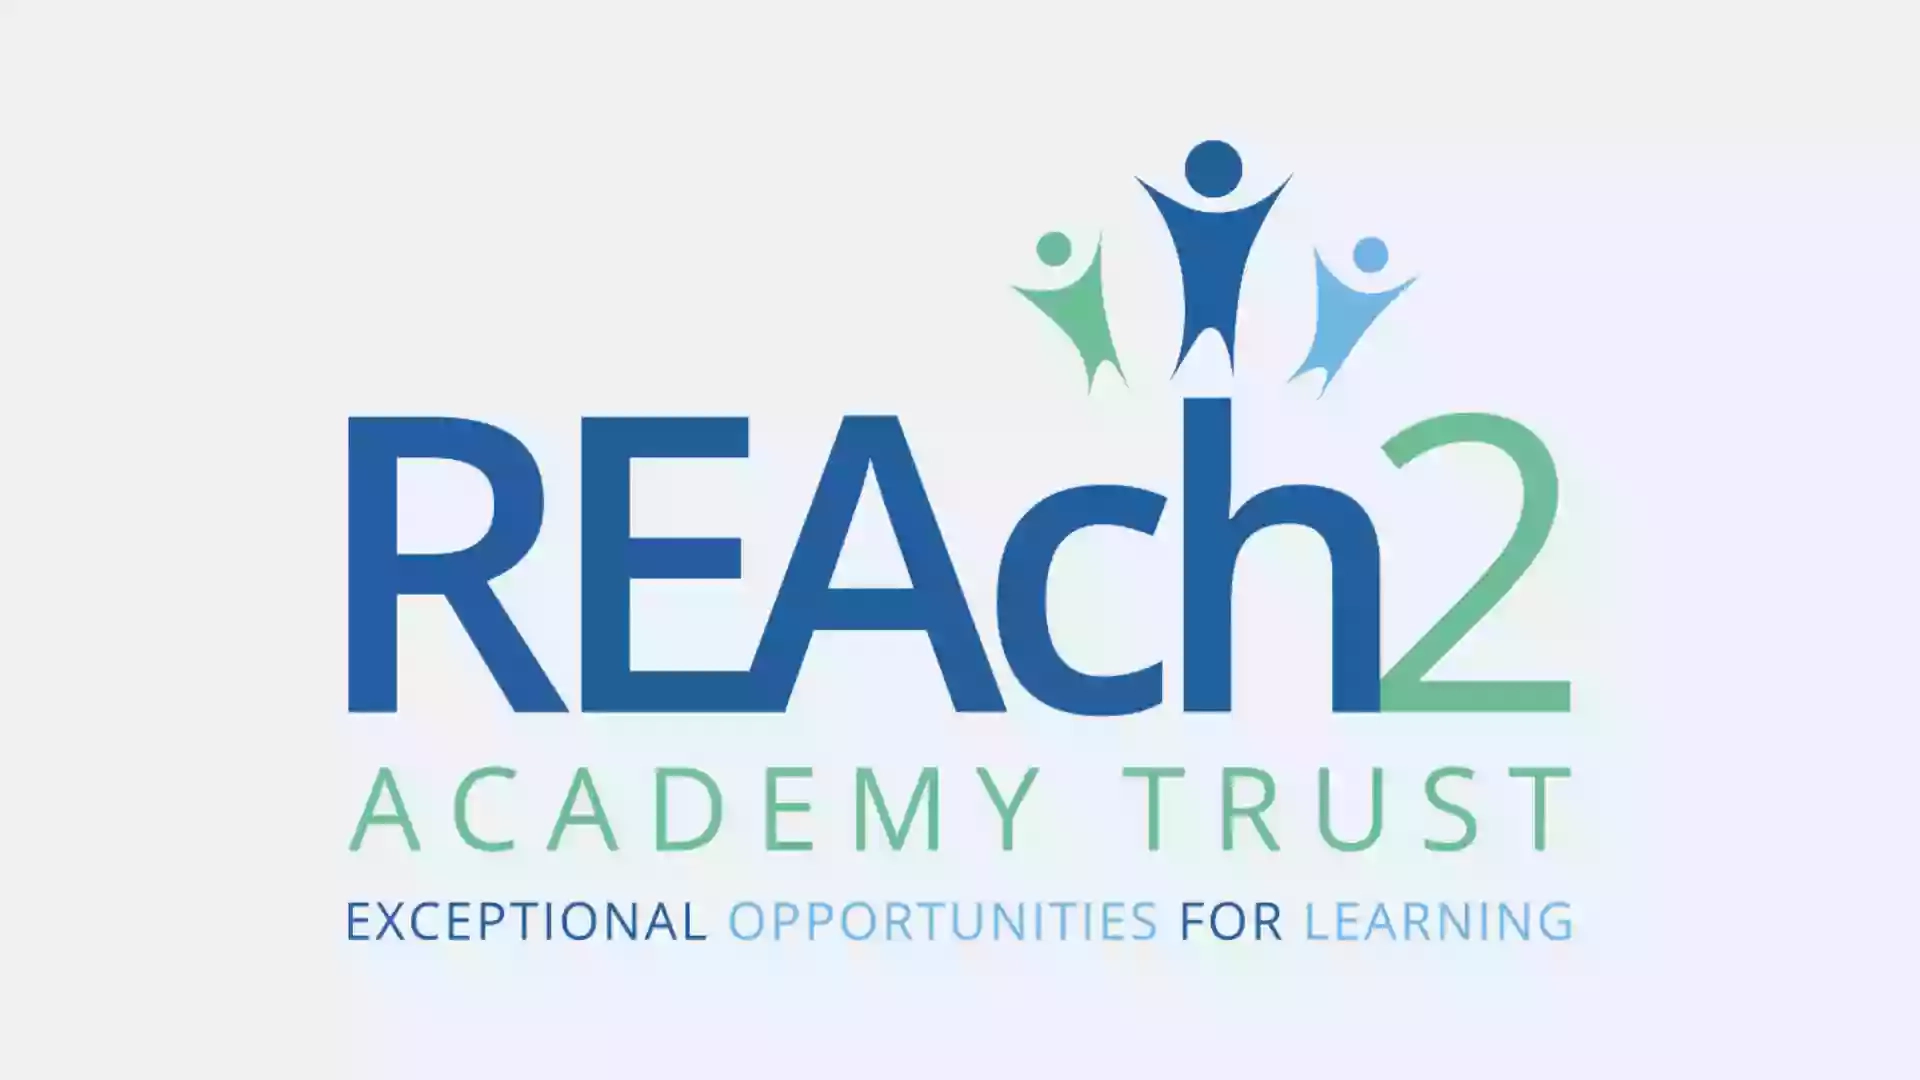 REAch2 Academy Trust